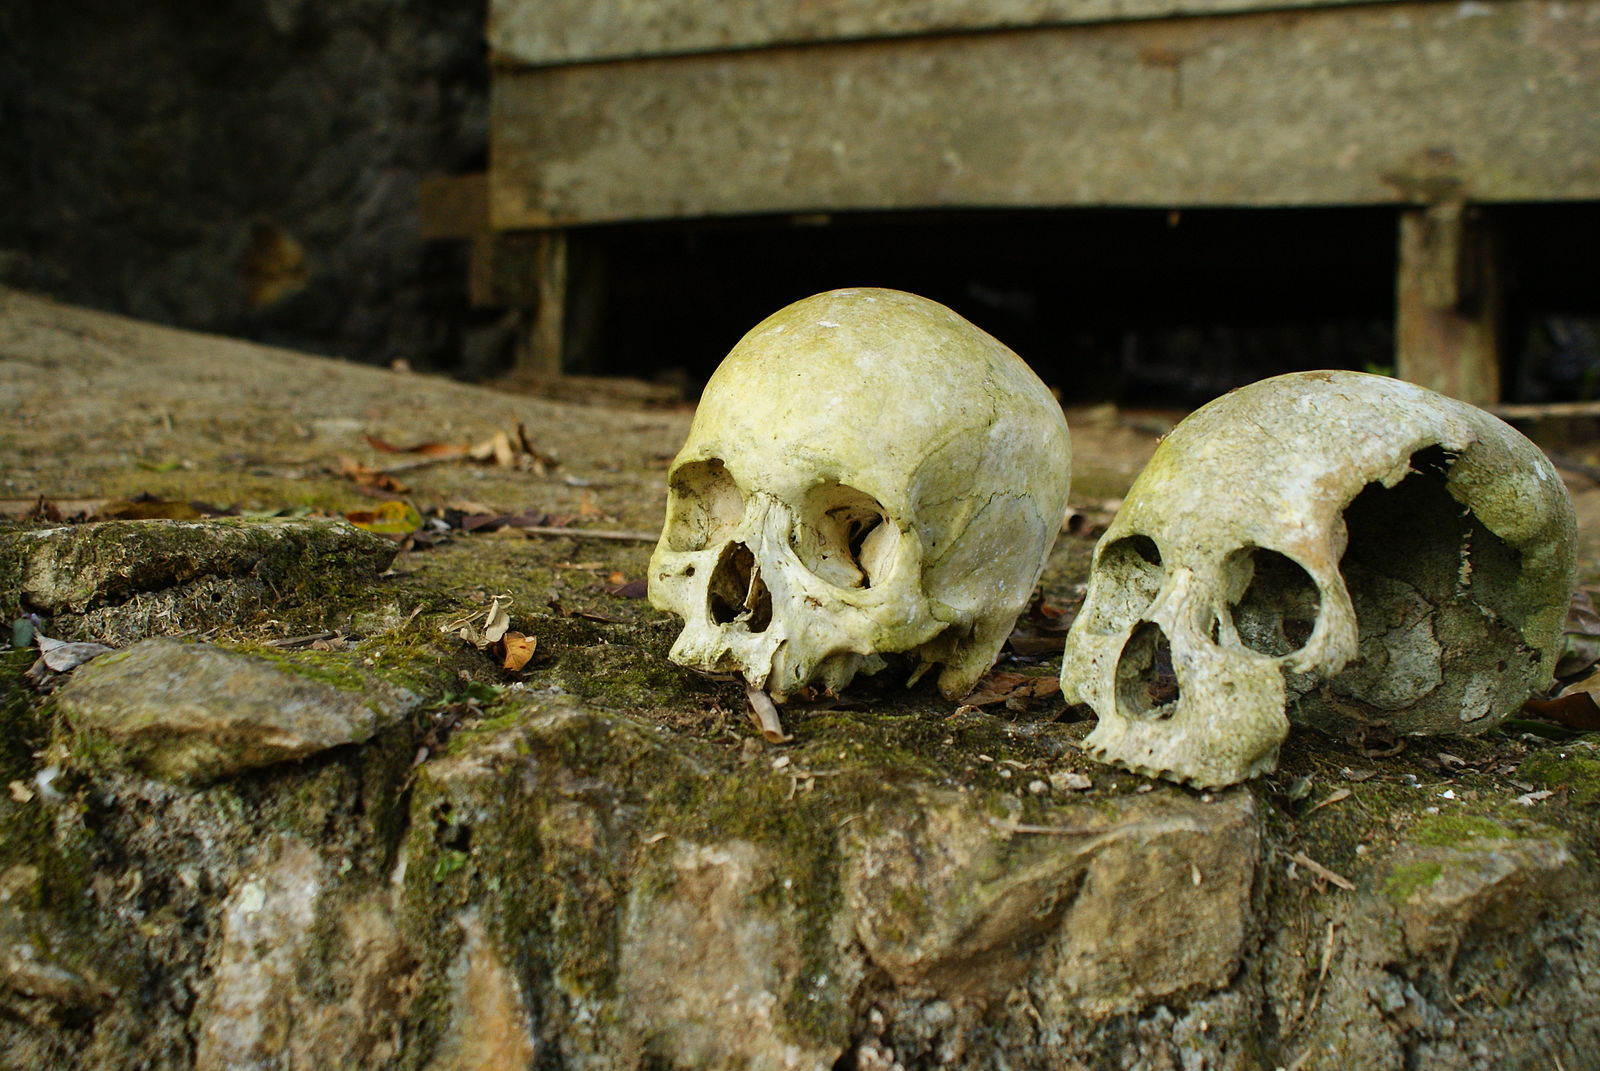 Human skulls in Tana Toraja (Indonesia), common scenery in public graves.